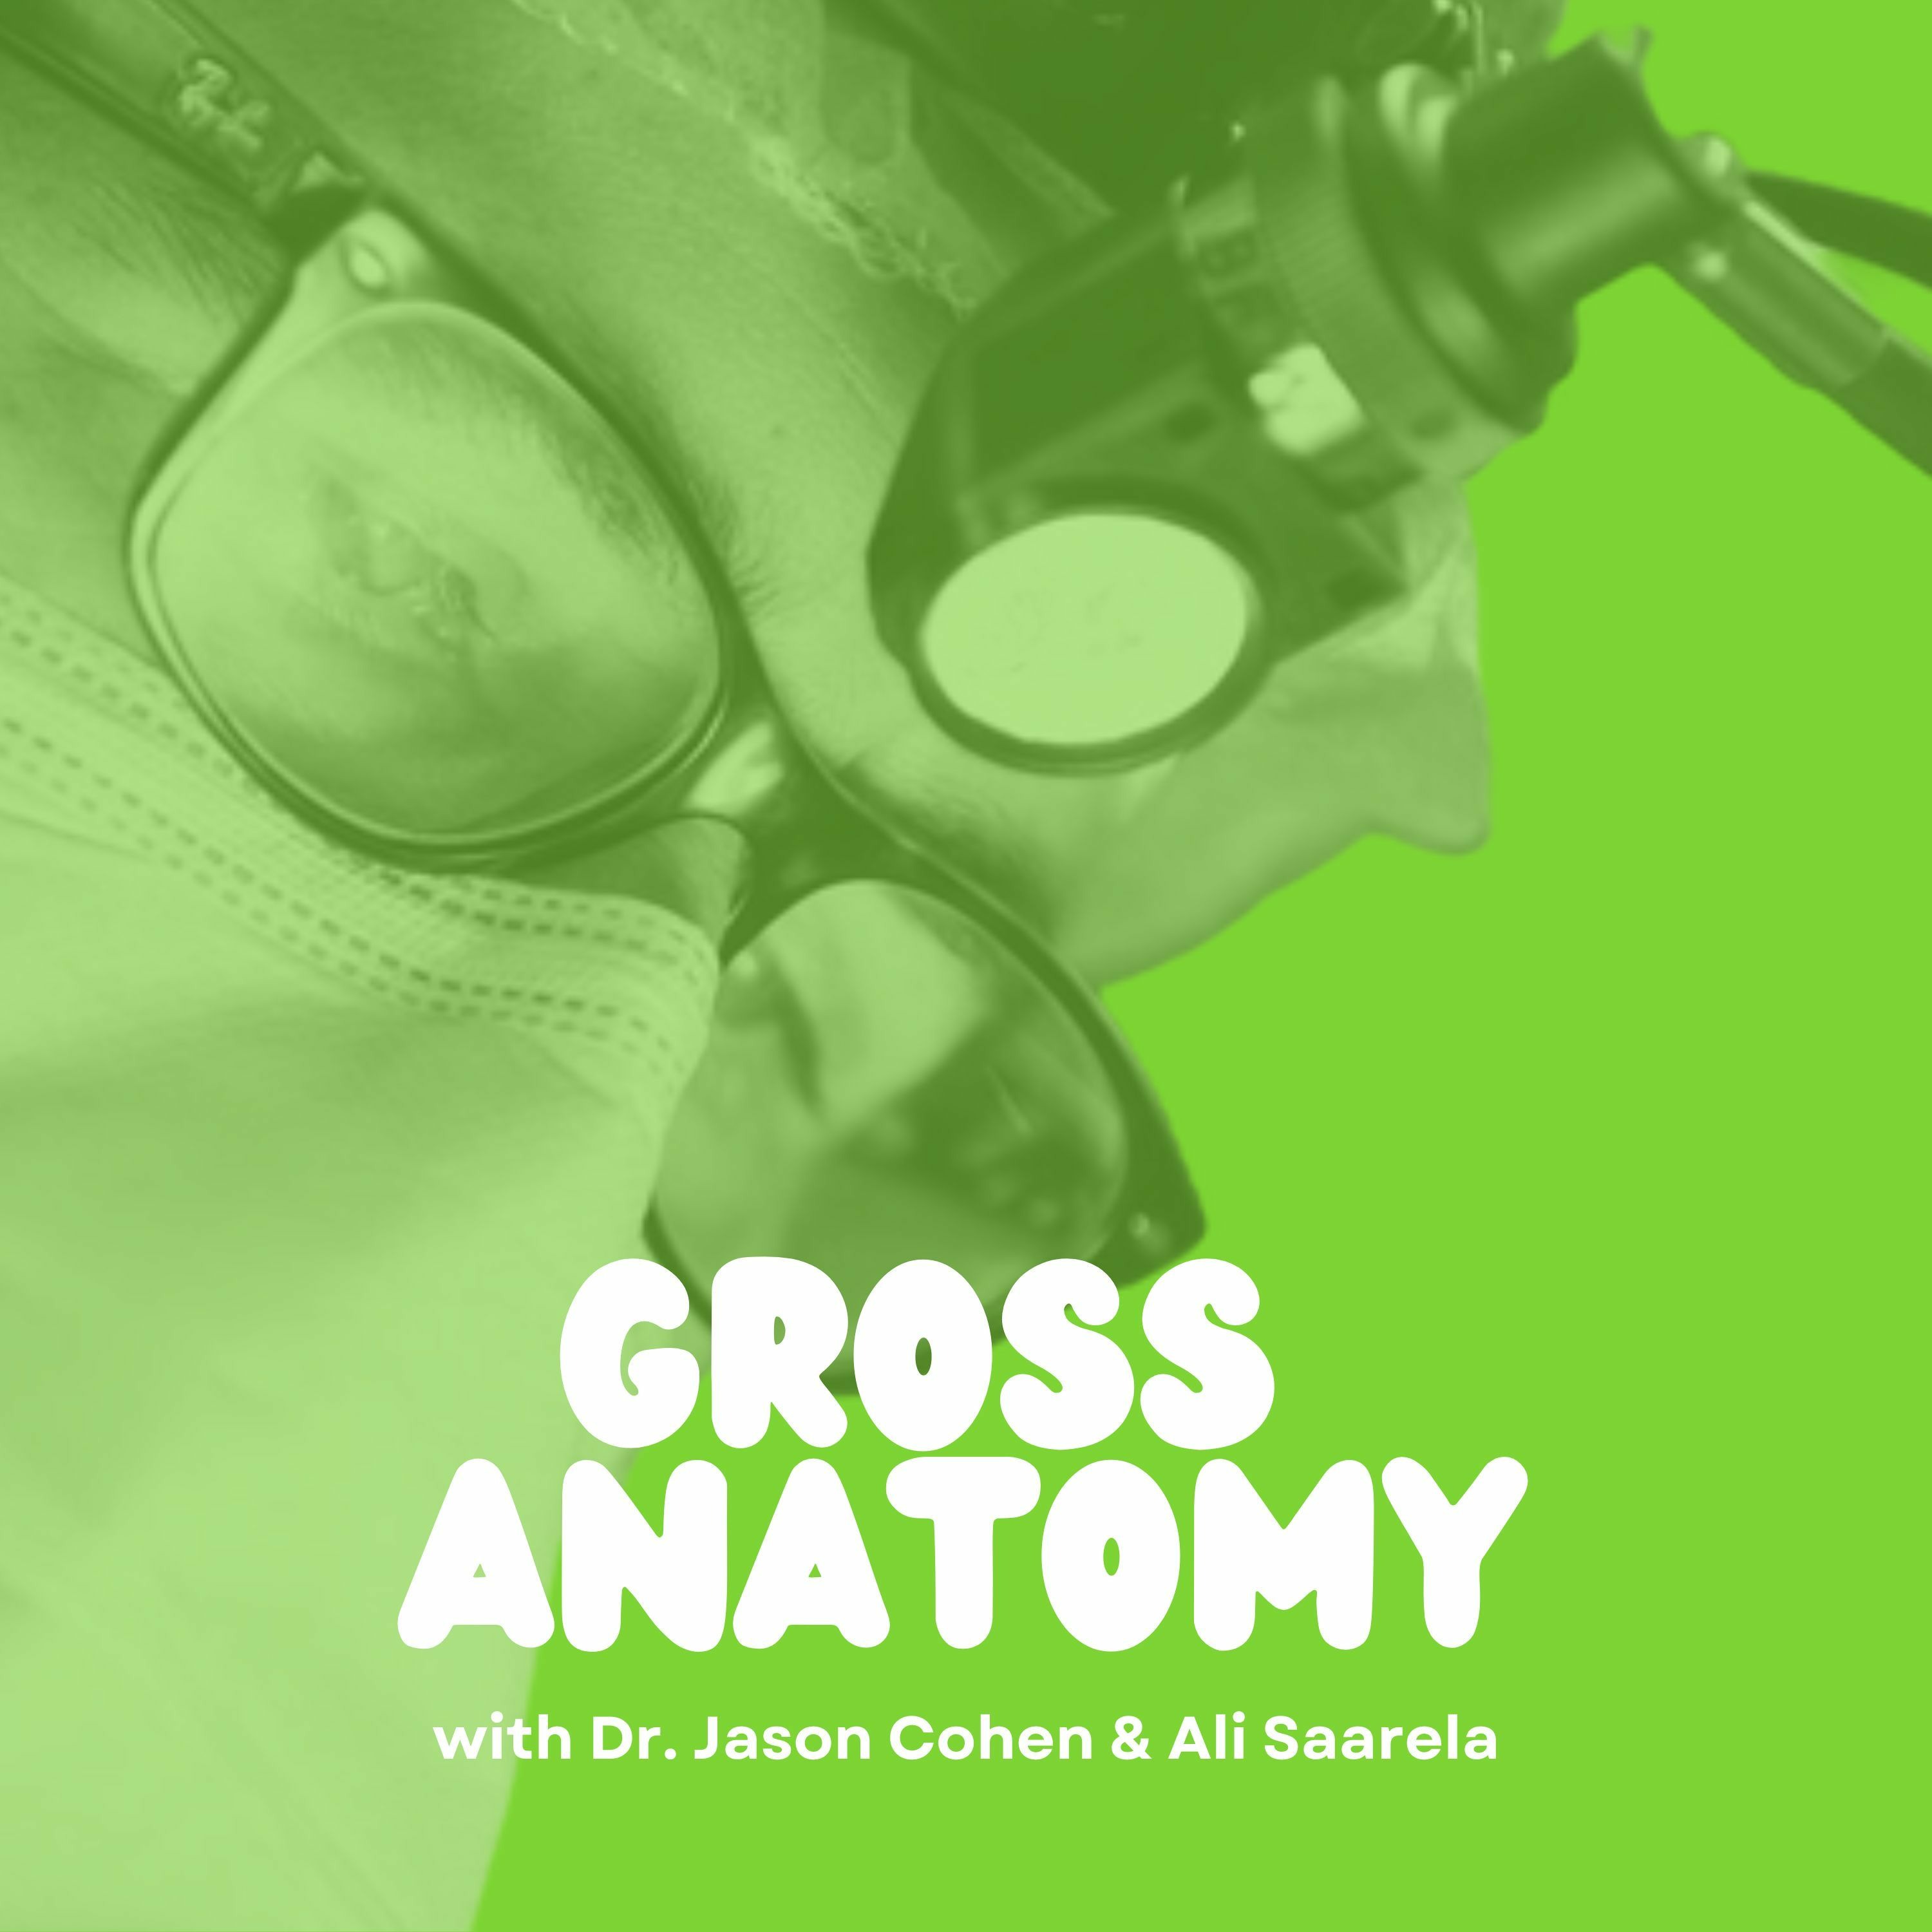 Gross Anatomy Trailer